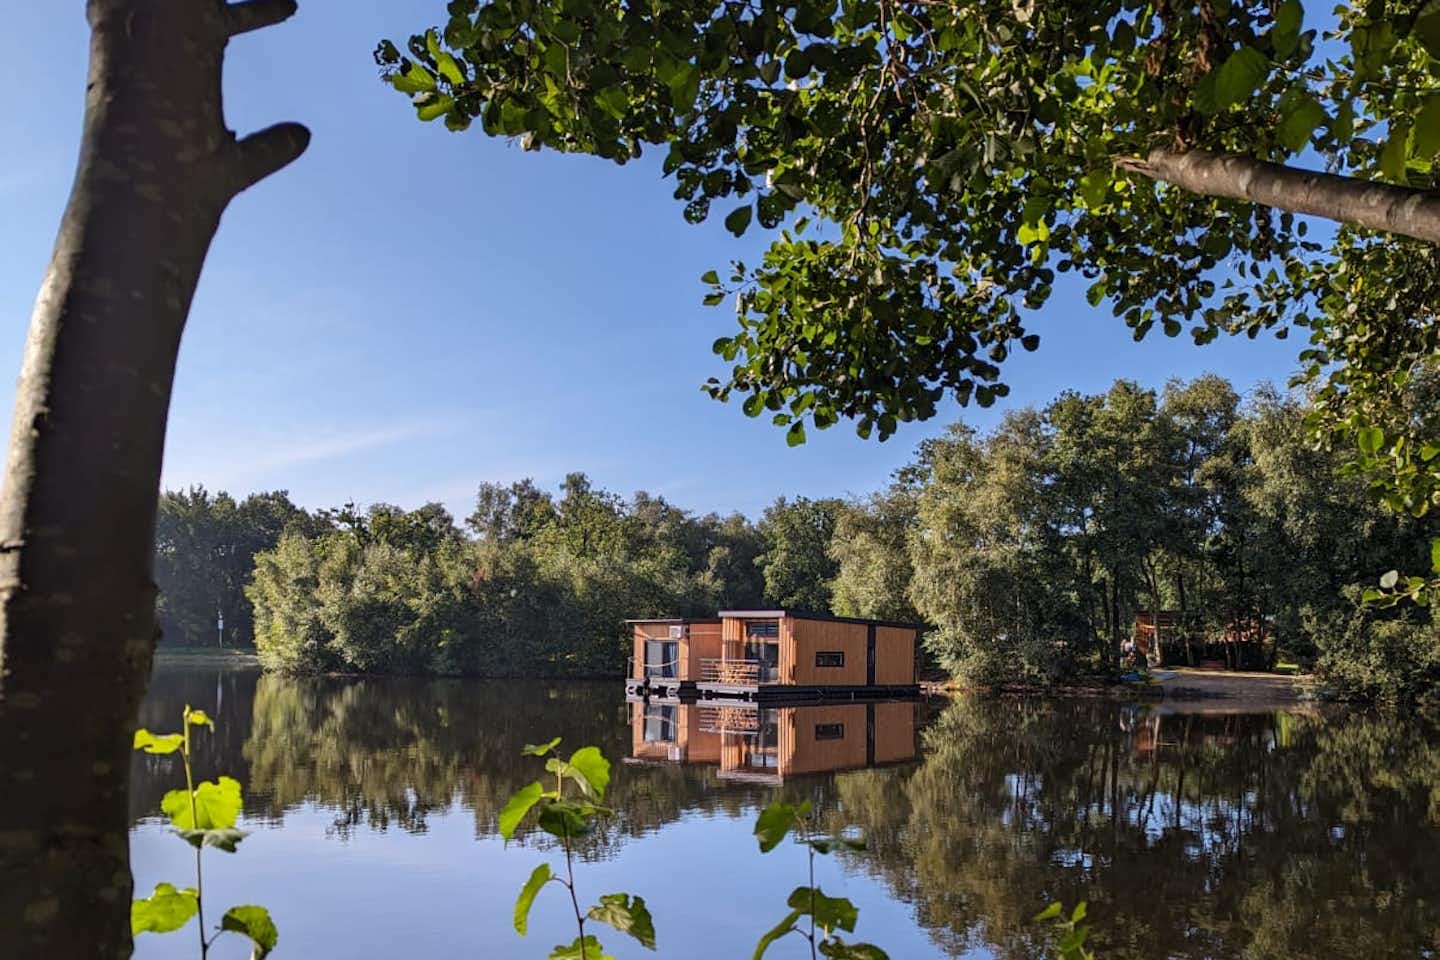 Campingplatz Papenburg - Tiny Houses auf dem See